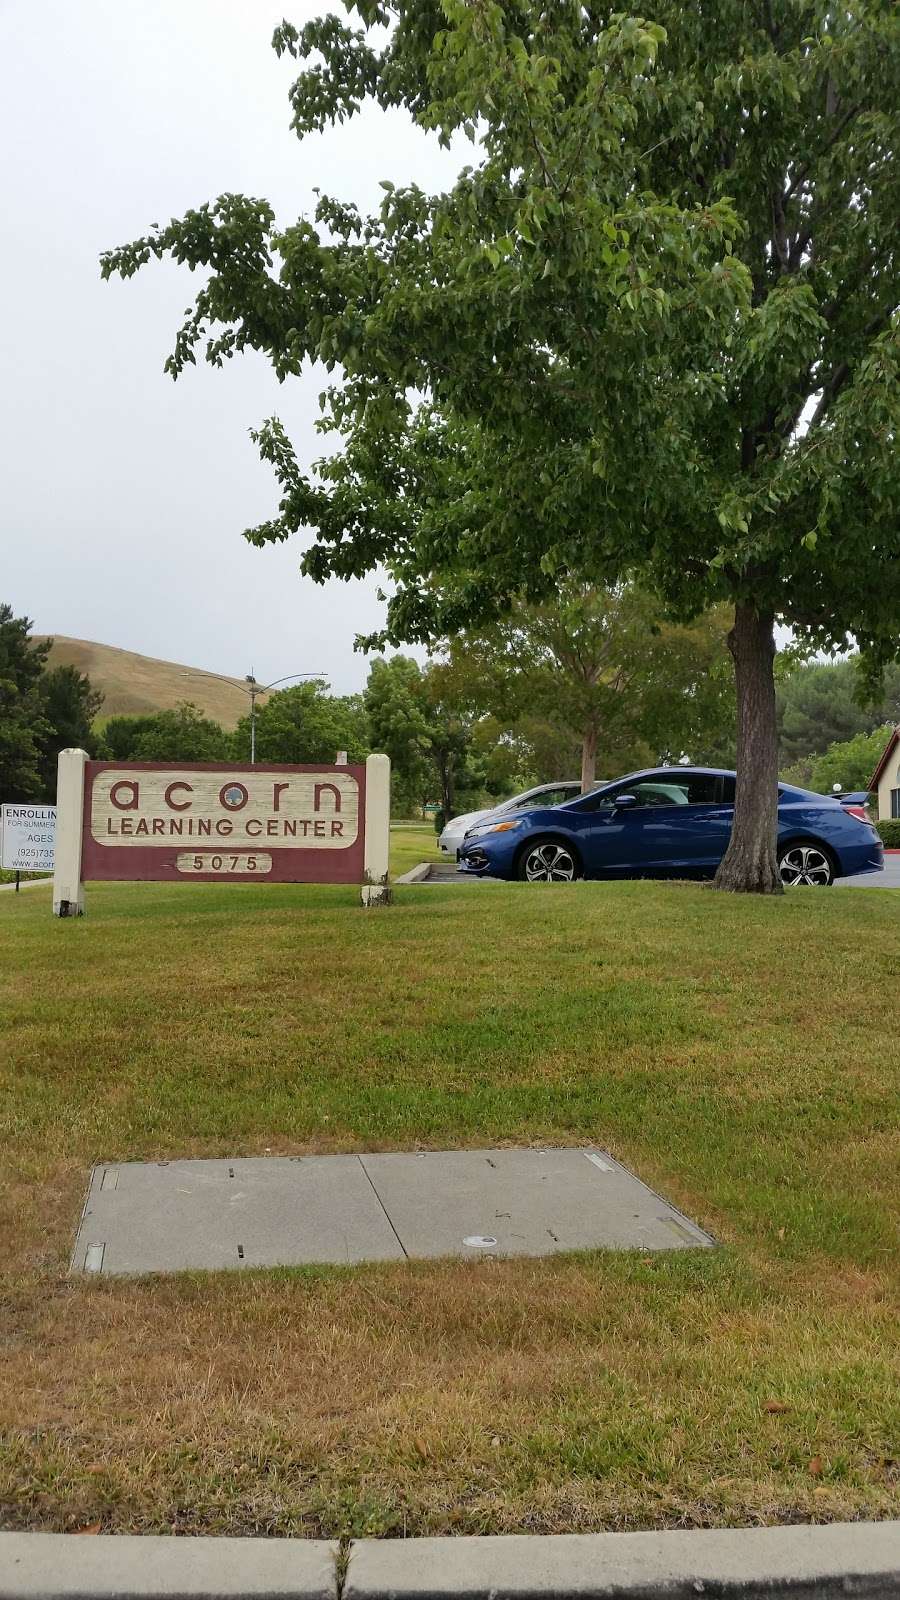 Acorn Learning Center - school  | Photo 1 of 1 | Address: 5075 Crow Canyon Rd, San Ramon, CA 94582, USA | Phone: (925) 735-7900